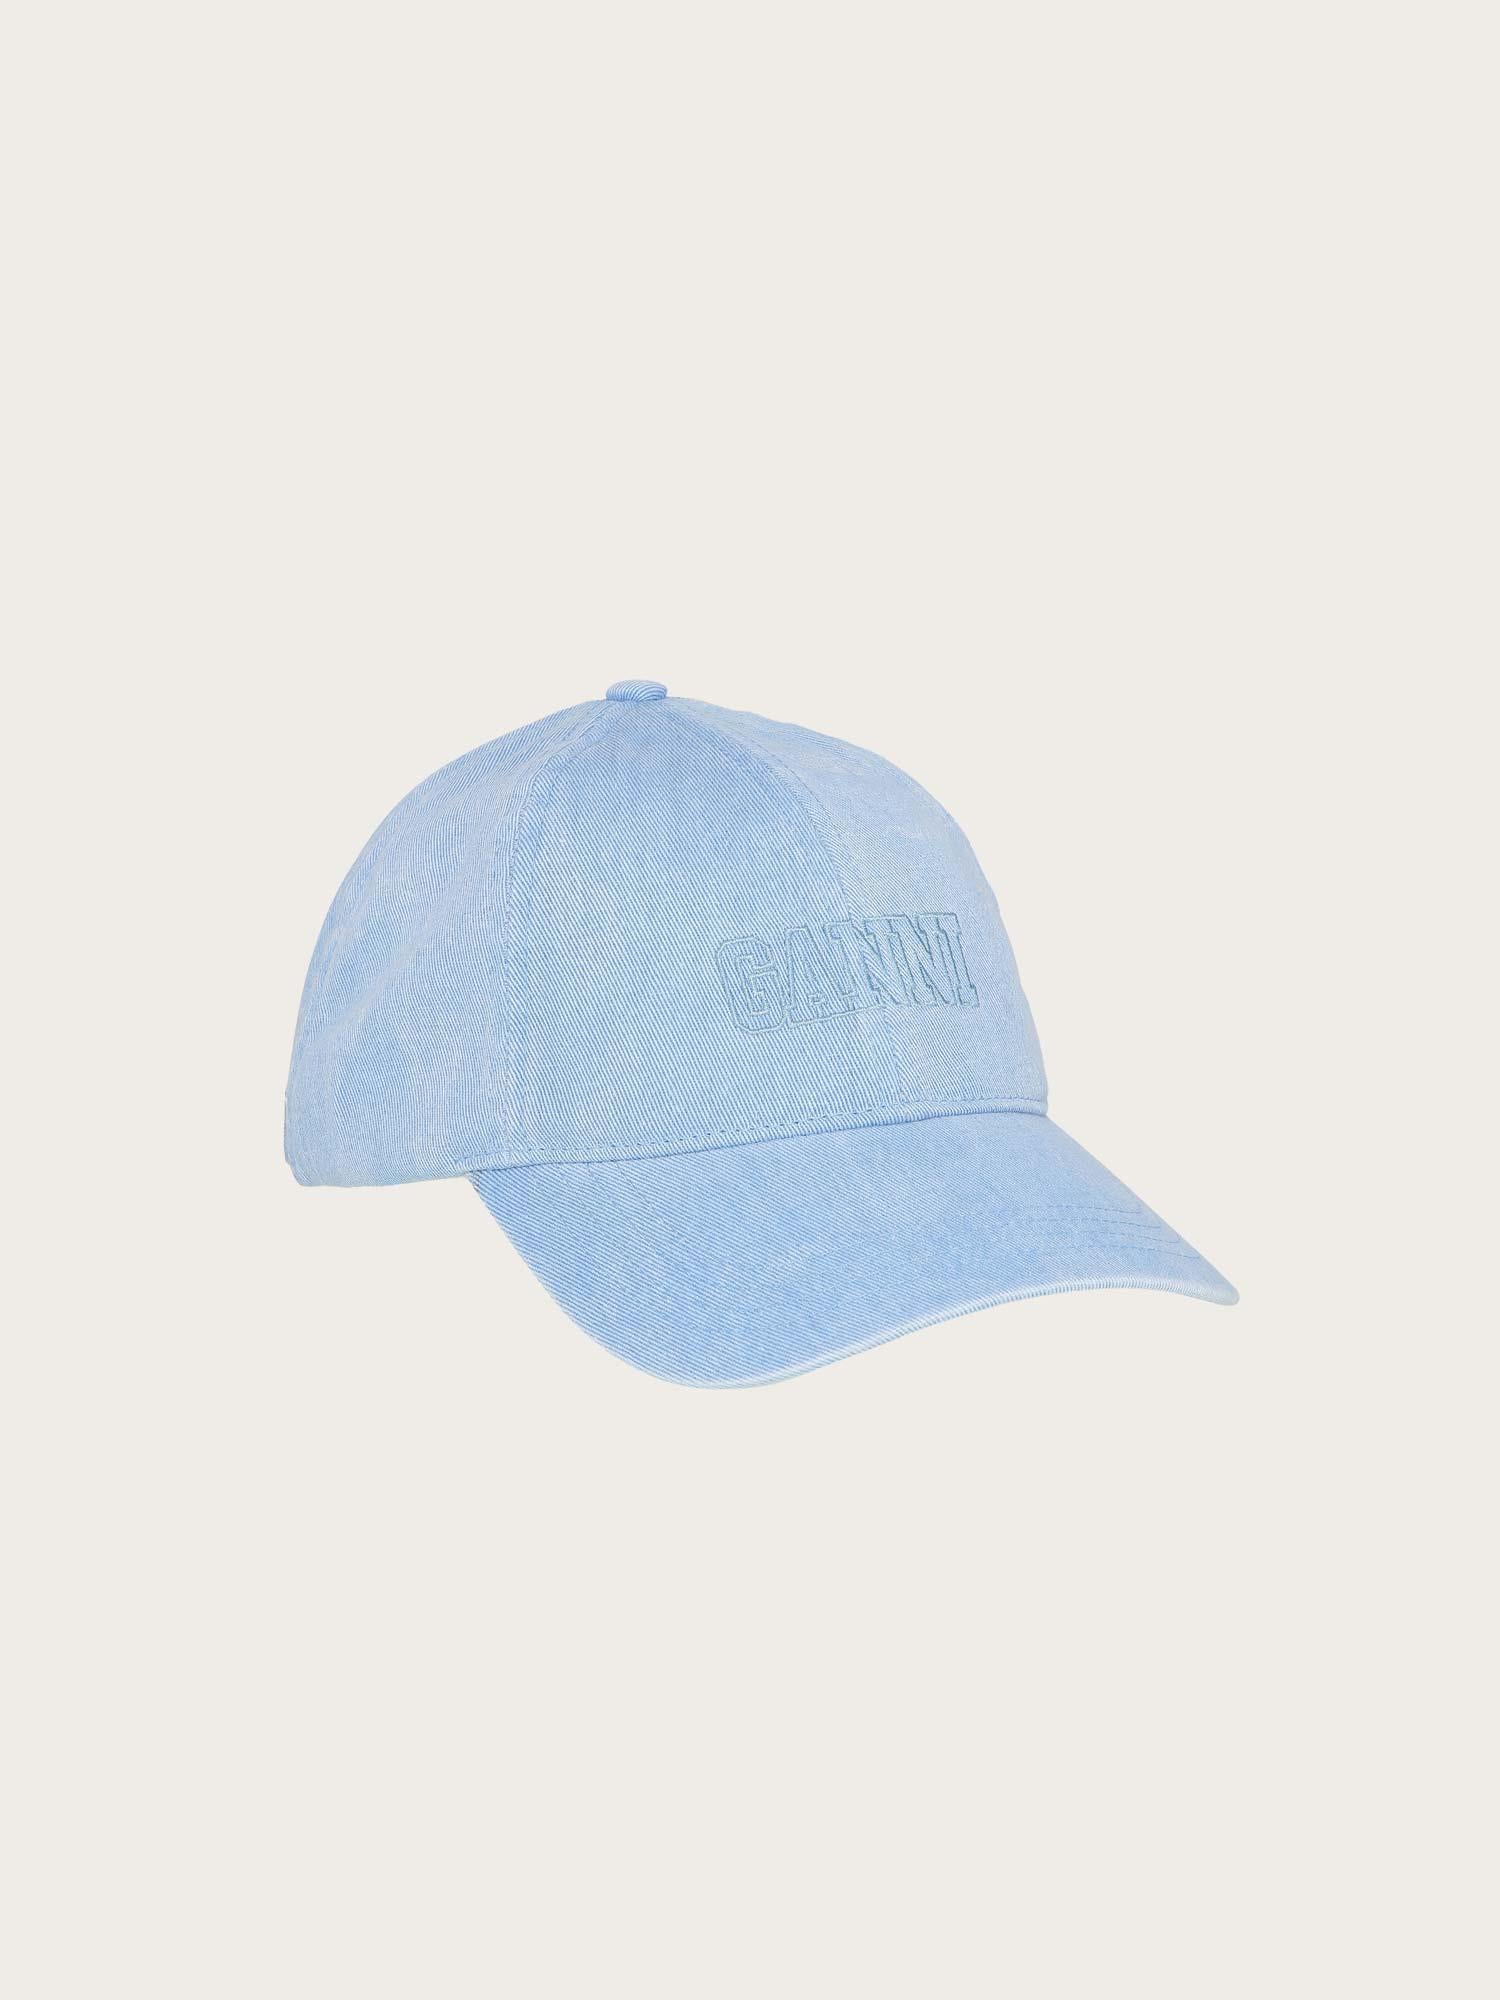 A5760 Cap Hat Denim - Baby Blue